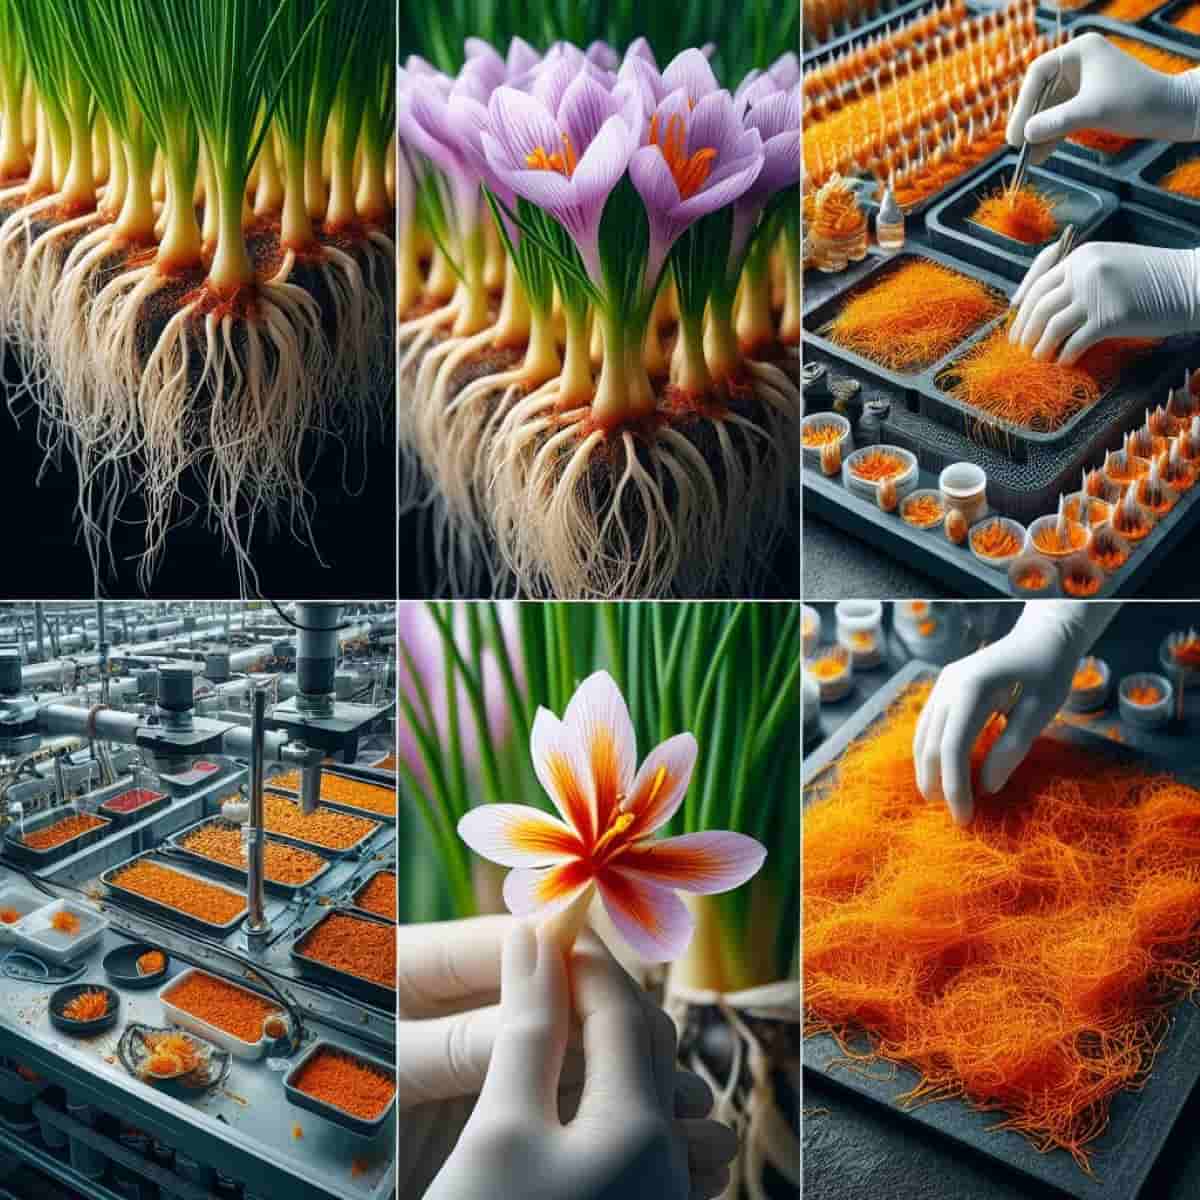 Growing Saffron using Hydroponics